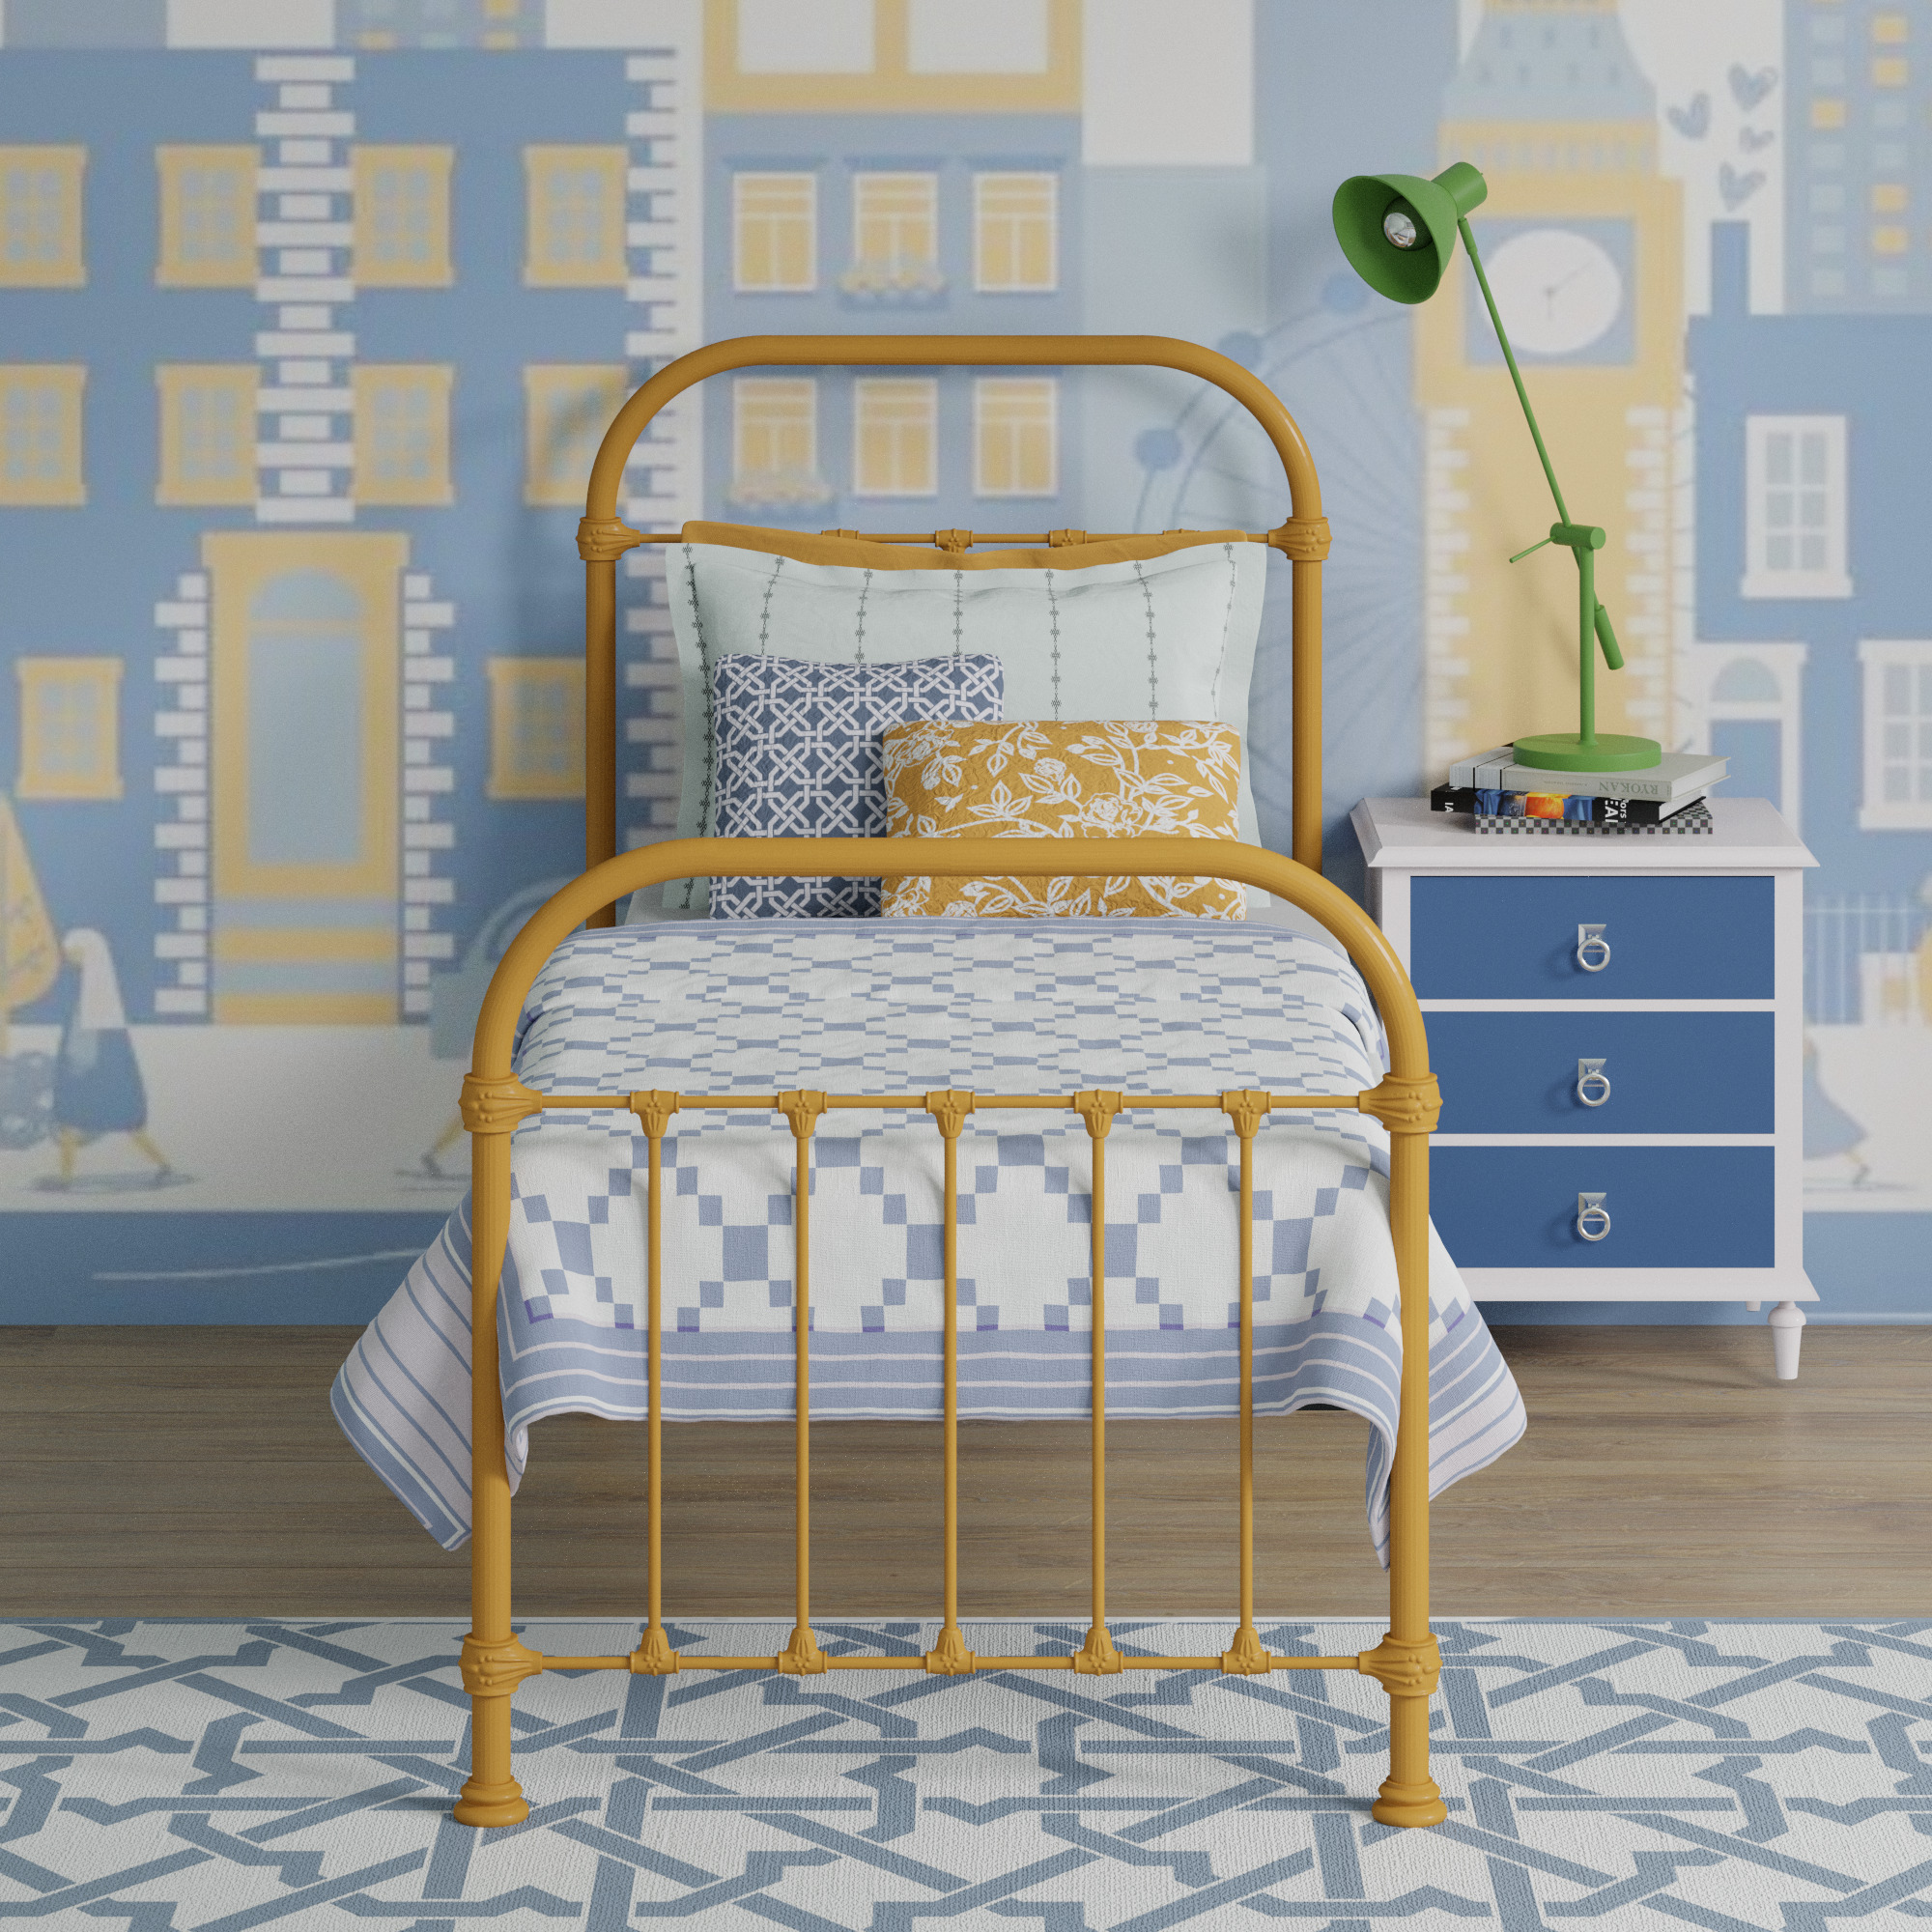 Timolin single iron bed - Blue and orange bedroom